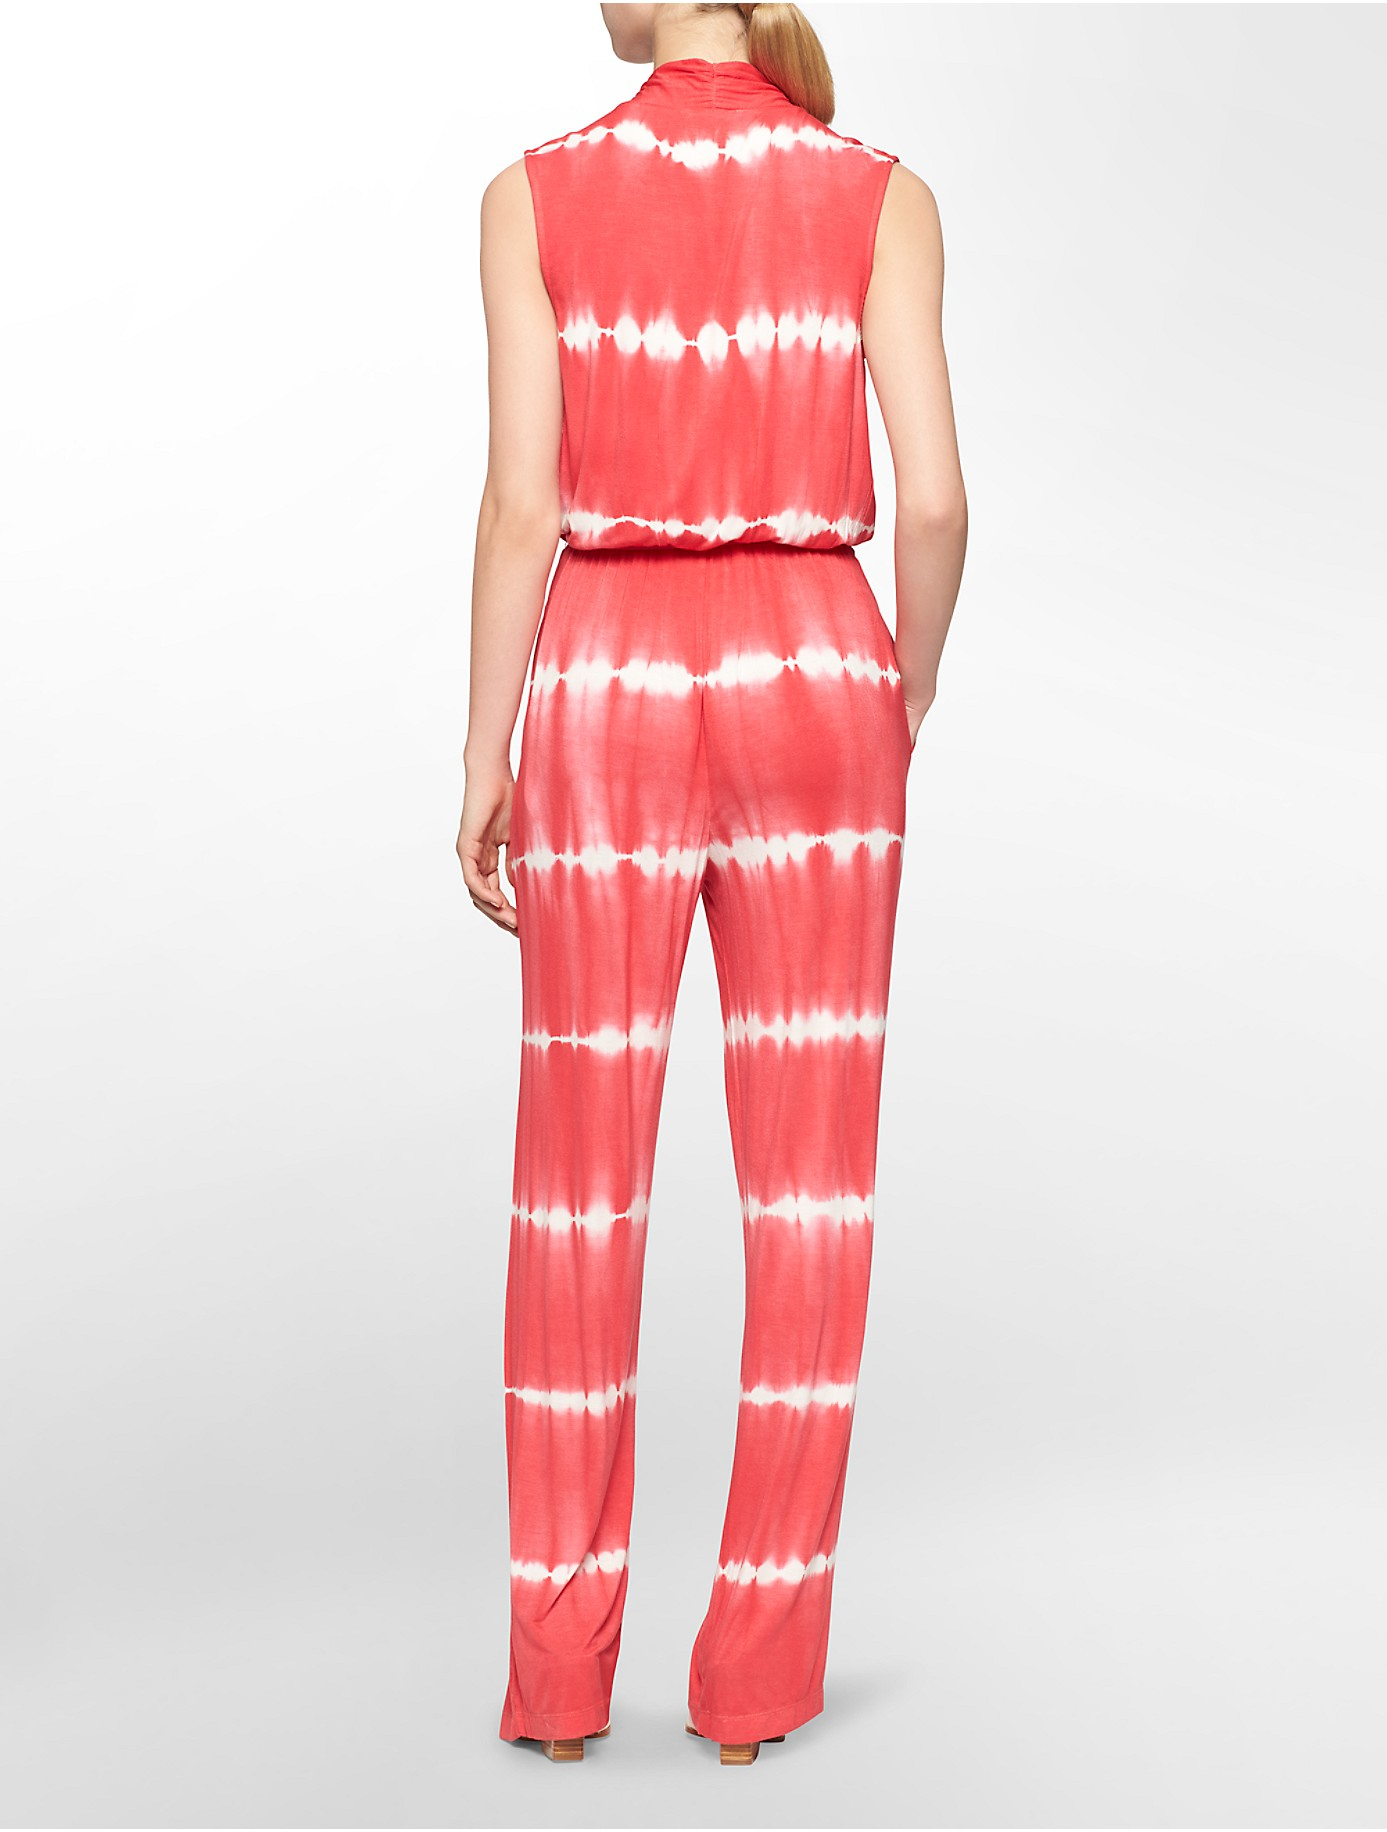 Calvin klein White Label Tie Dye Wrap Jumpsuit in Pink | Lyst